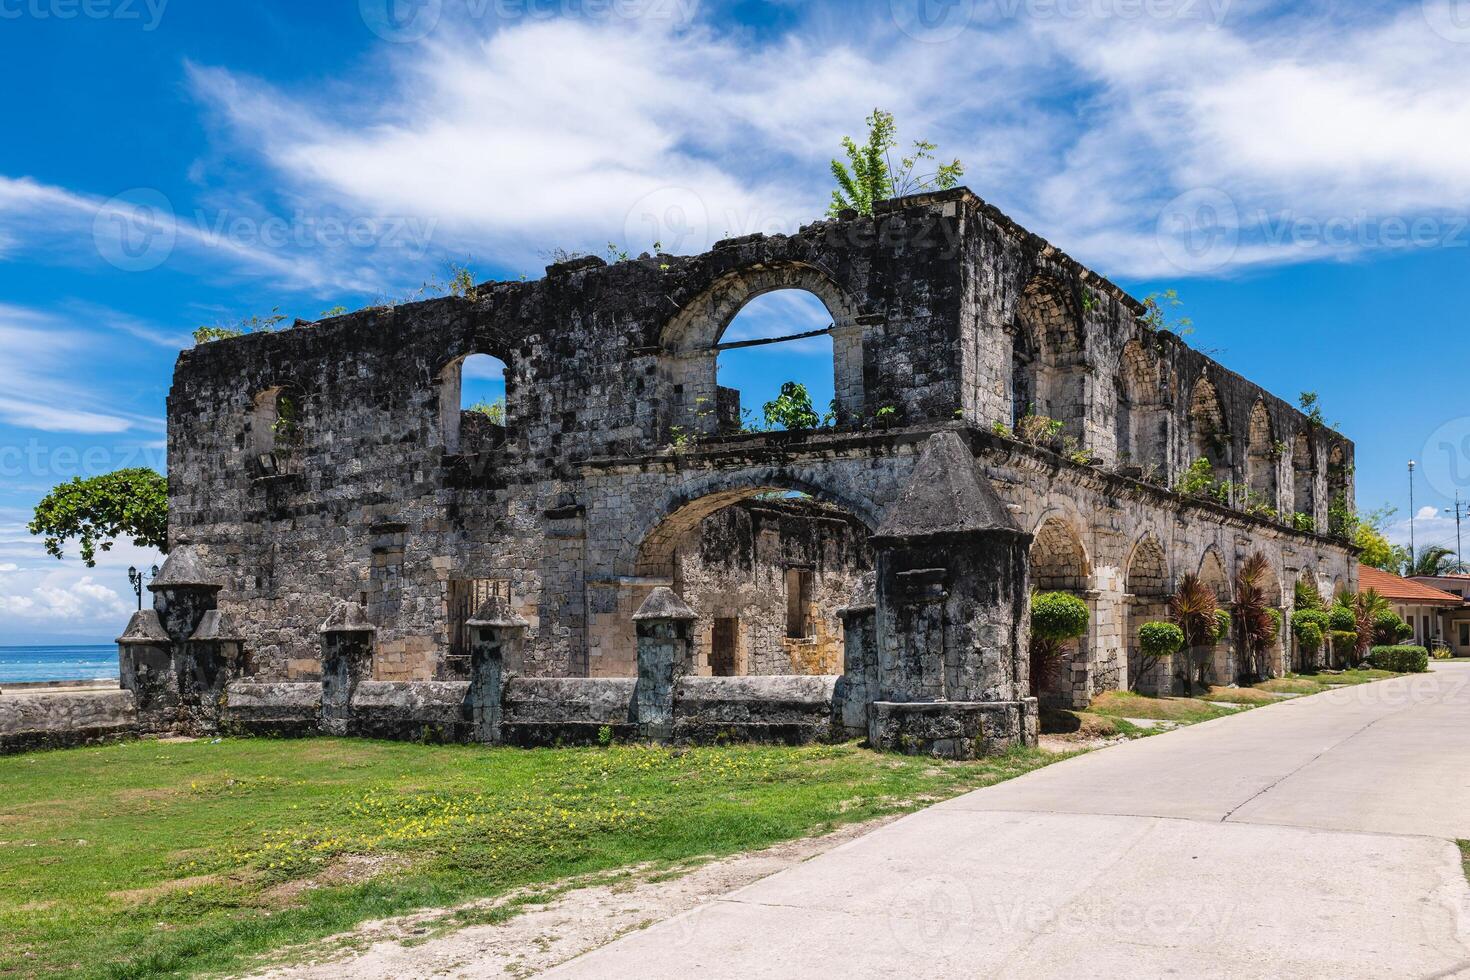 Cuartel ruins, Museo Oslob, at oslob in cebu island, philippines photo